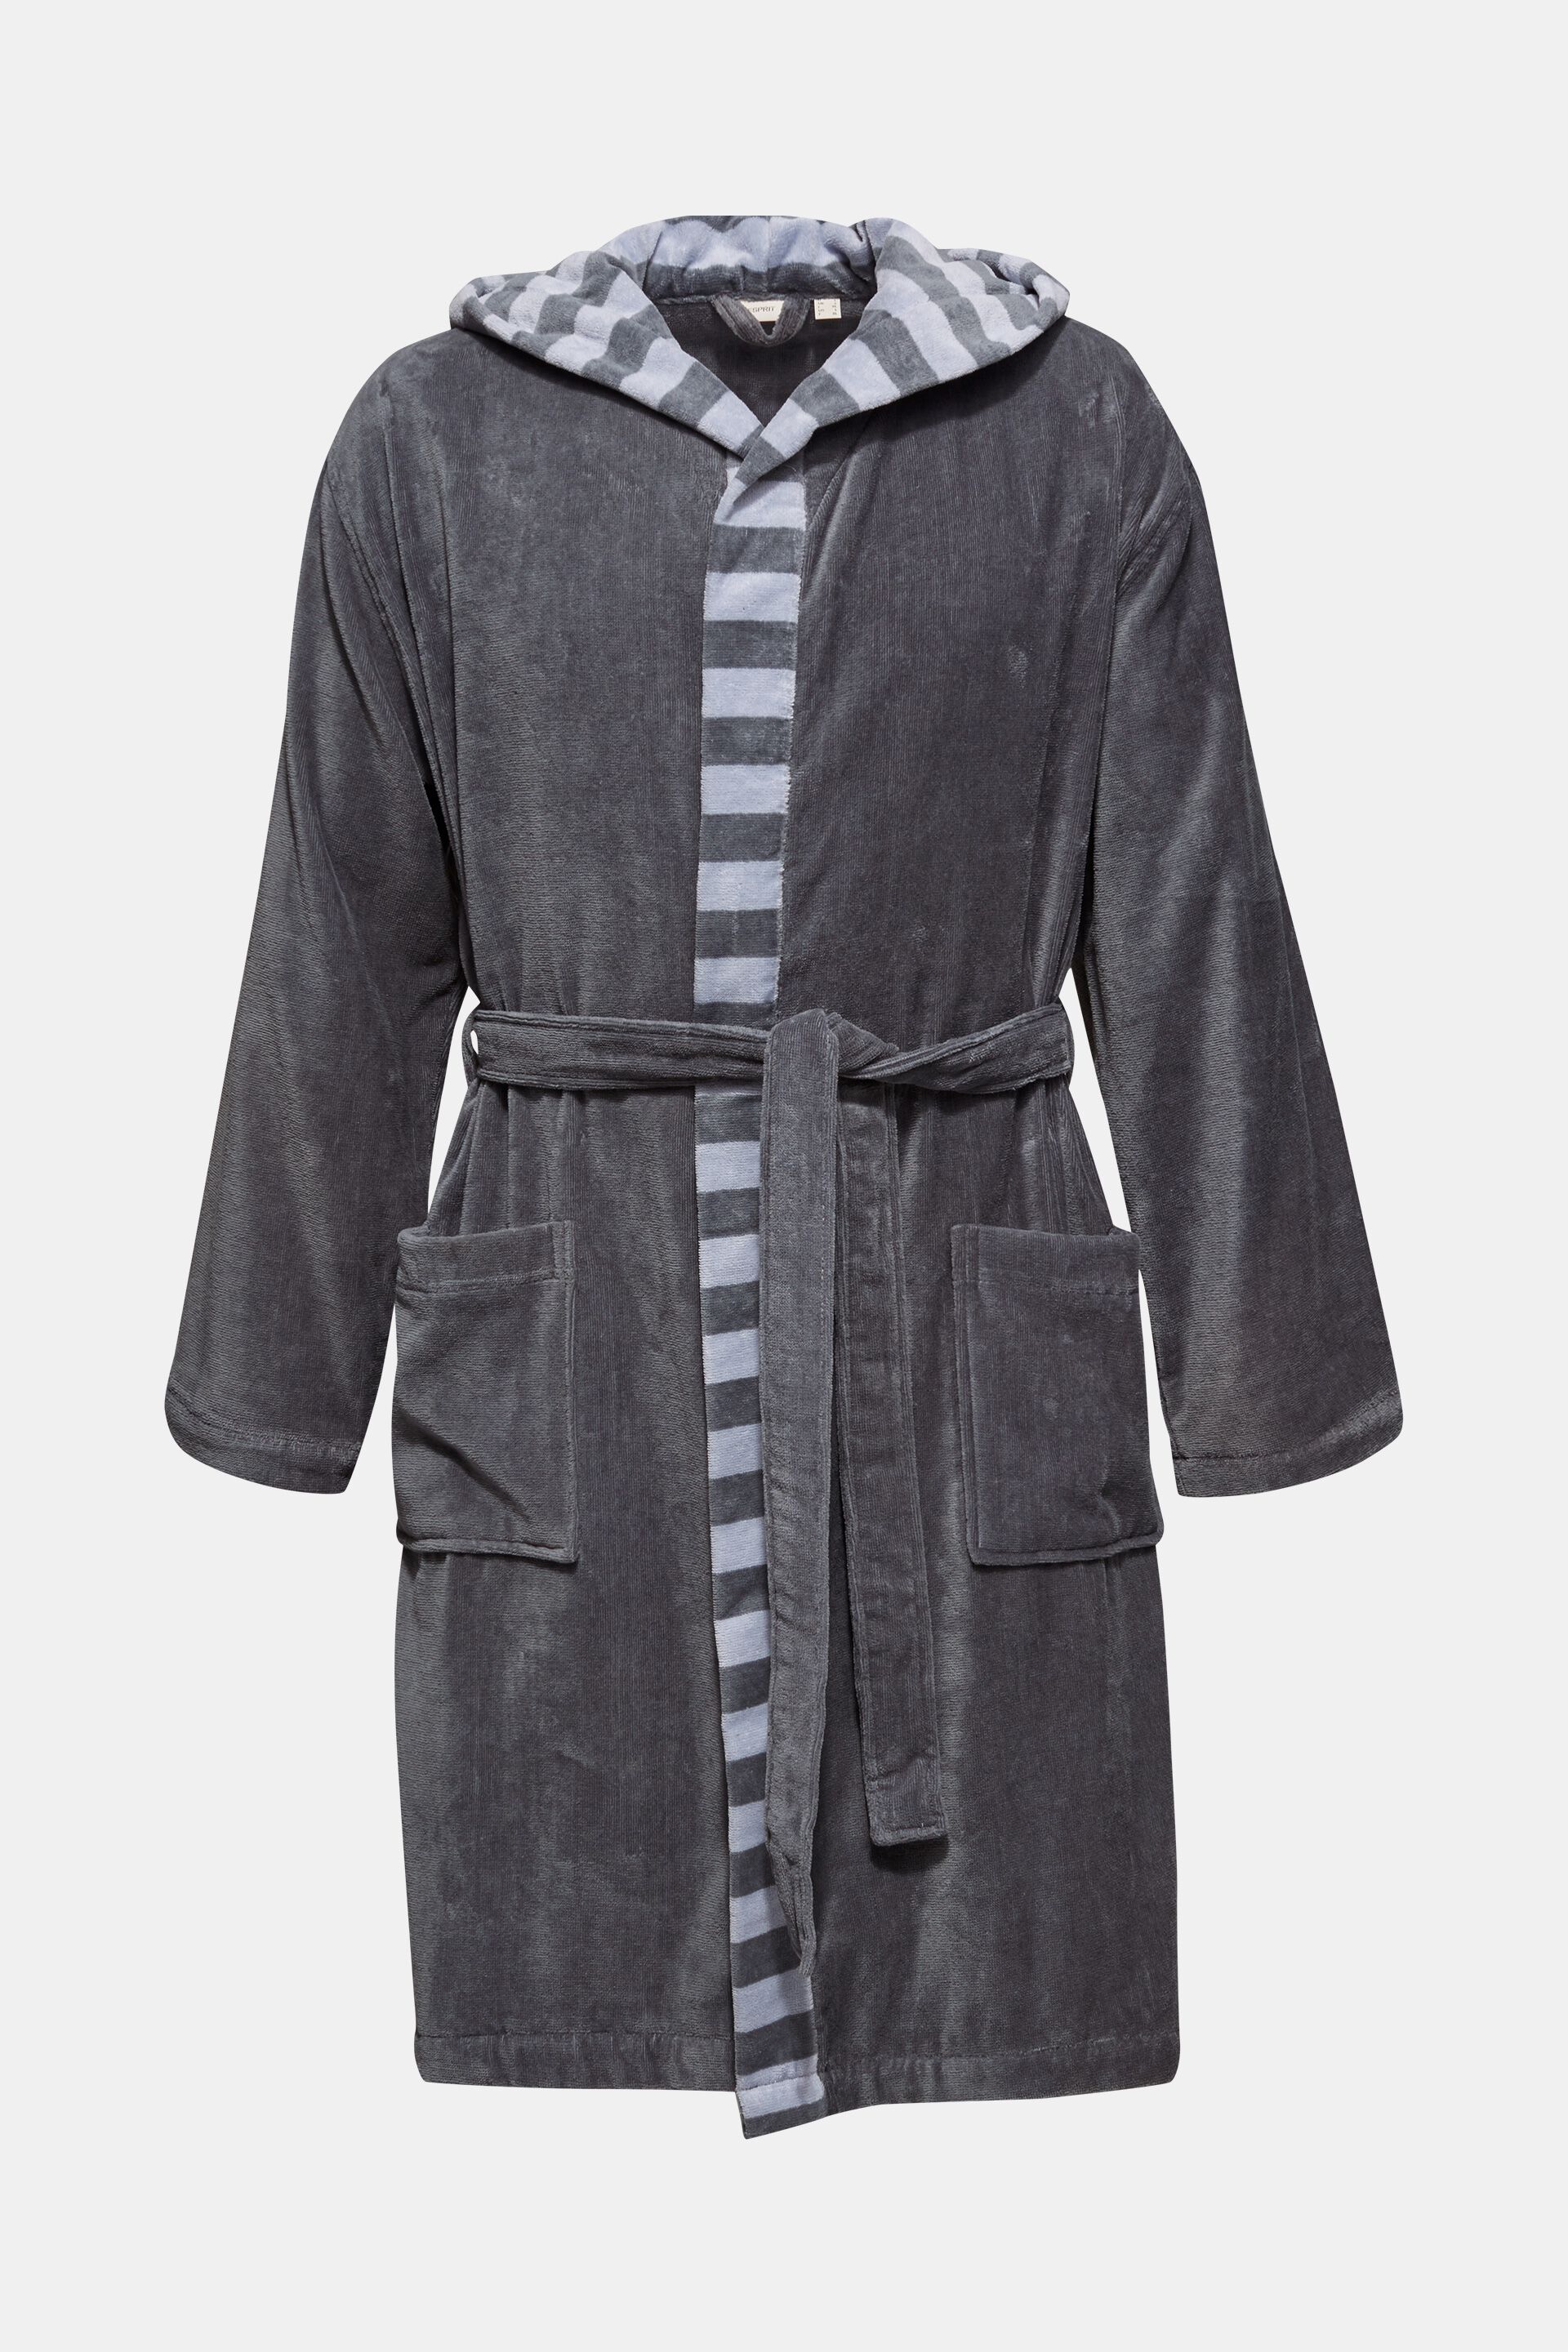 Esprit Online Shop Damen Mens striped bathrobe, 100% cotton